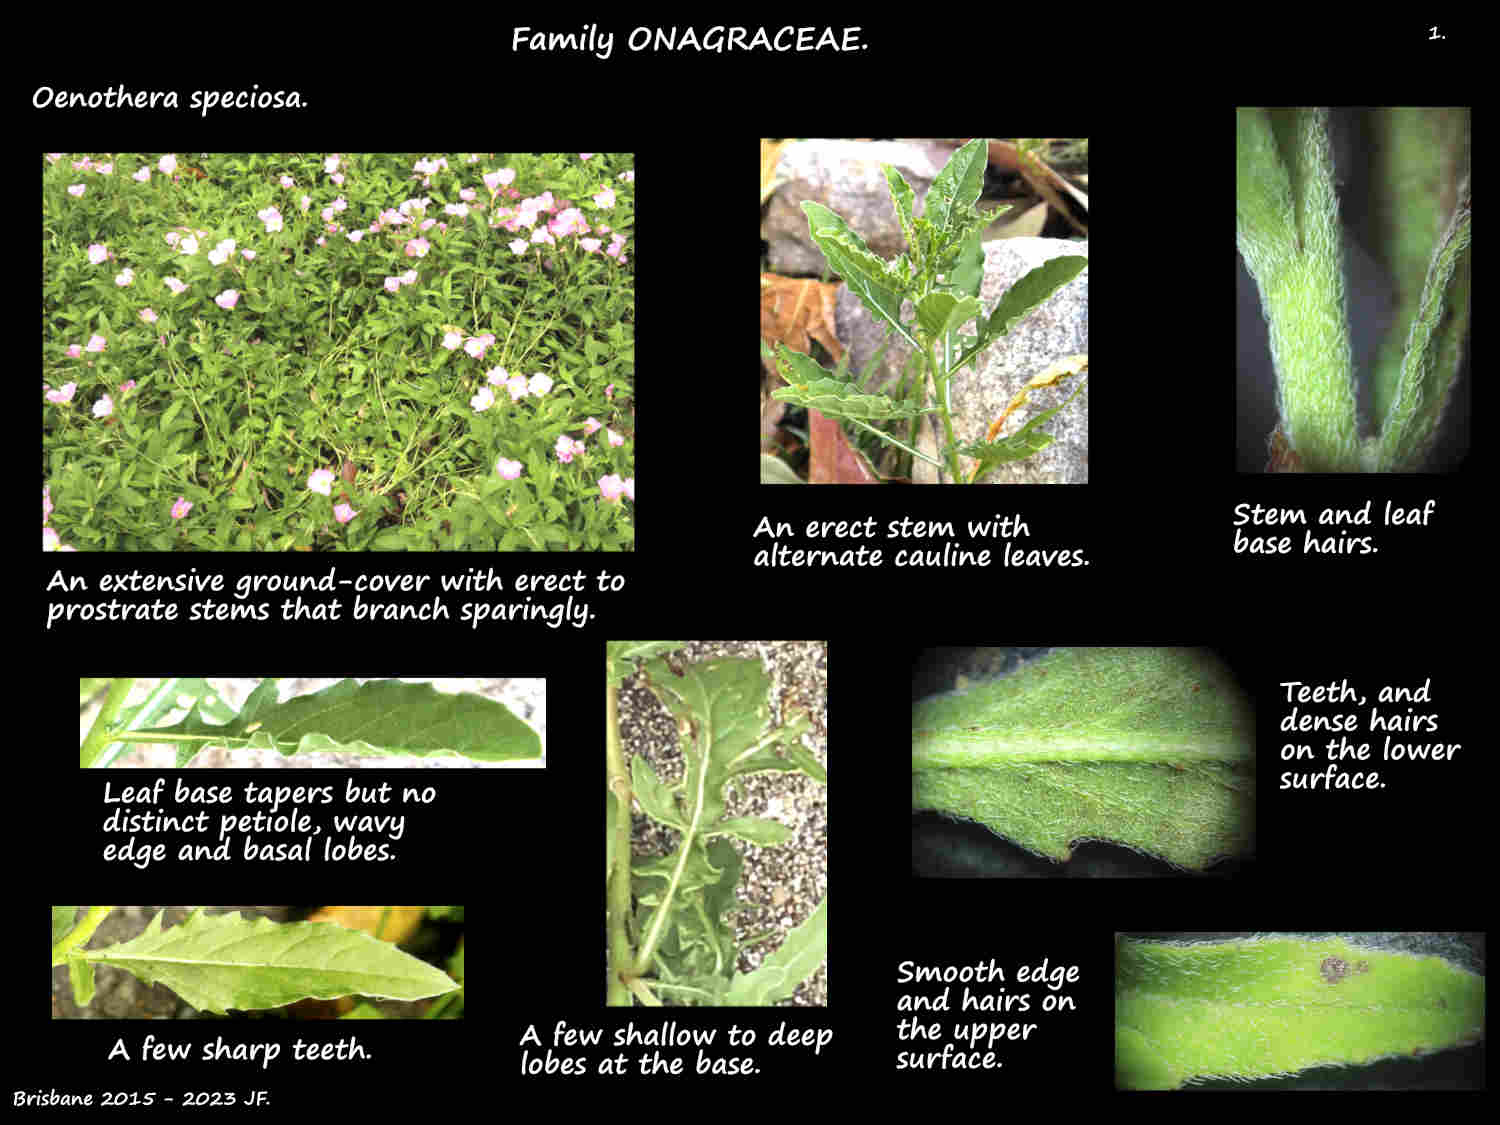 1 Oenothera speciosa plants & leaves